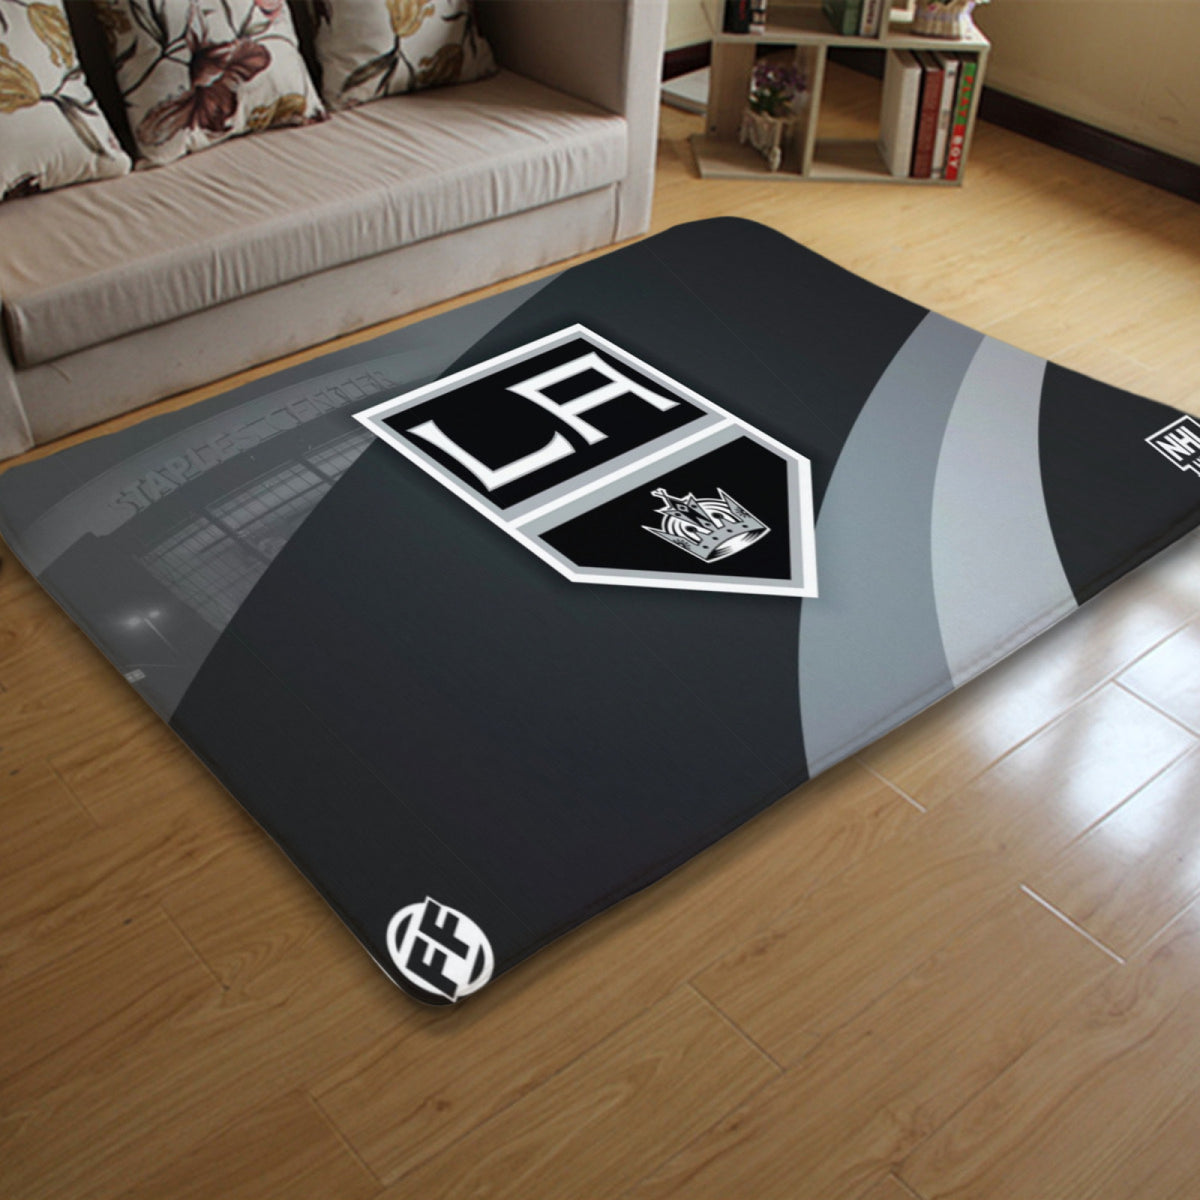 Los Angeles Kings Hockey League Carpet Living Room Bedroom Mats Kitchen Bathroom Rugs